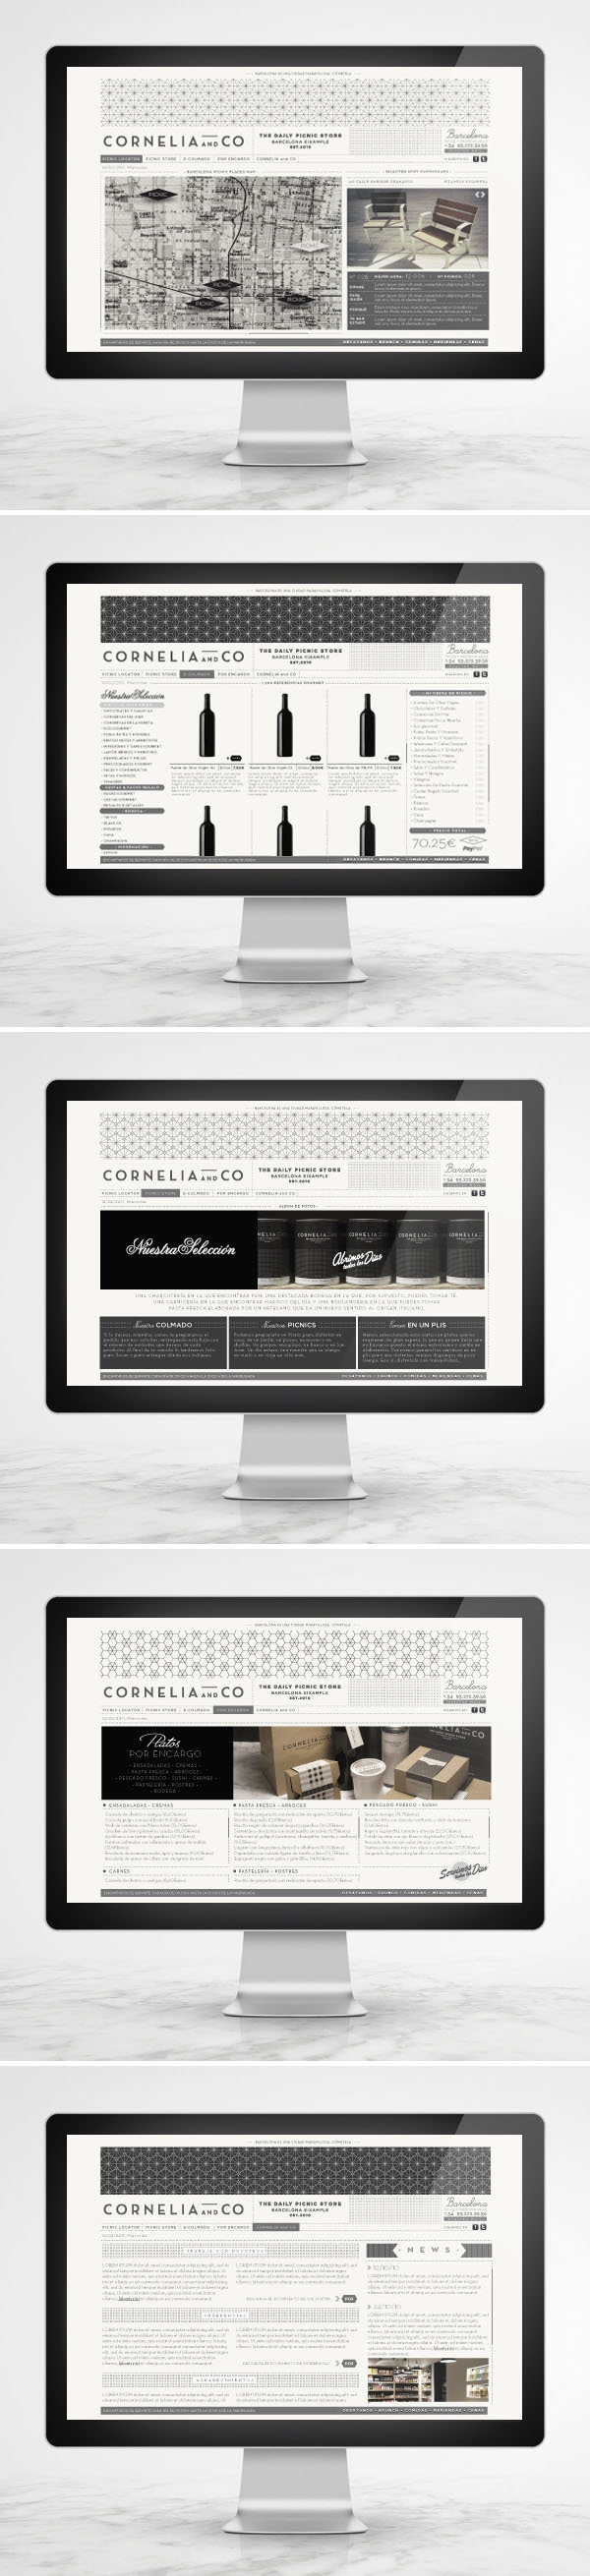 Cornelia and Co Website - Web Design by Oriol Gil